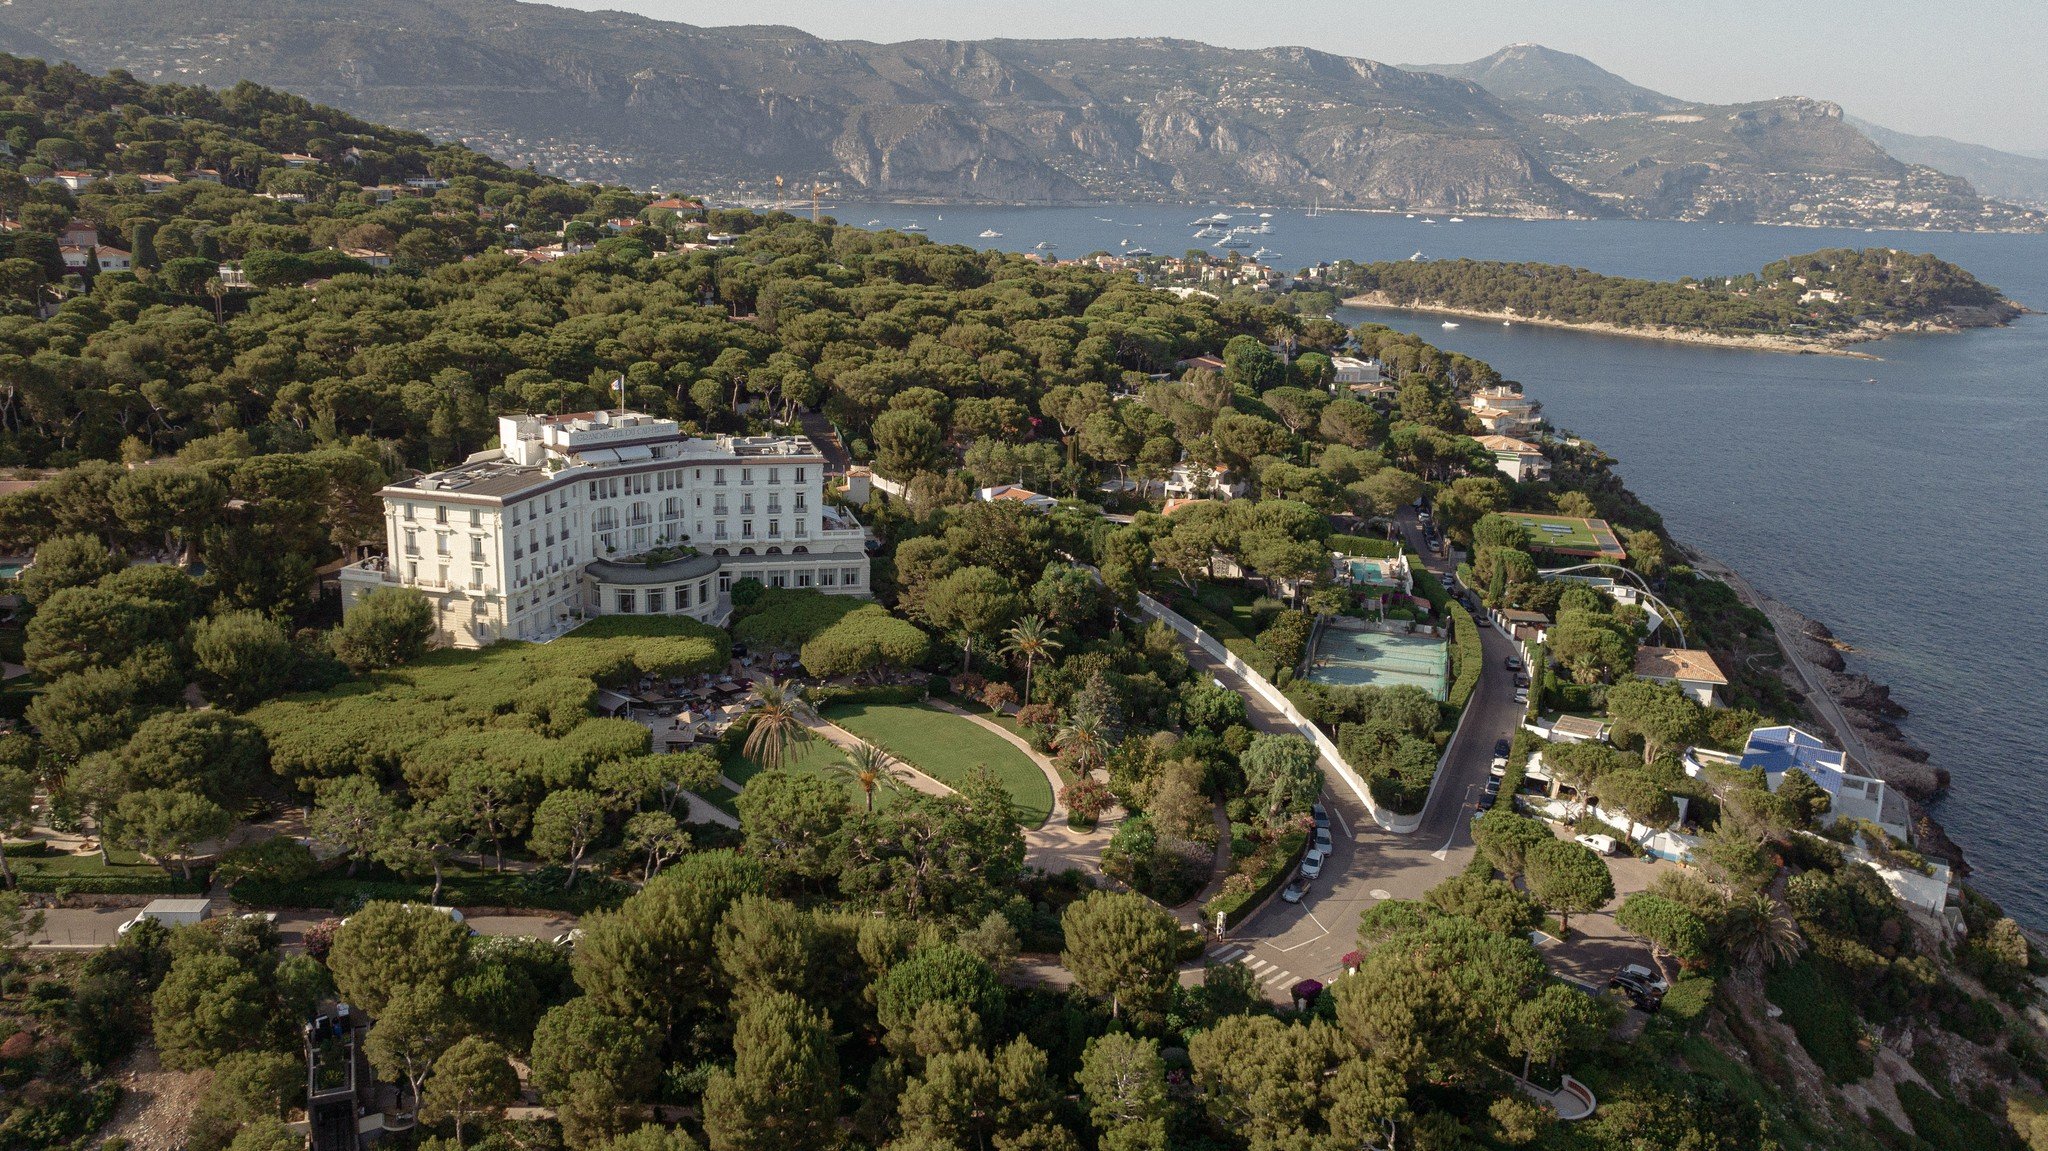 Grand-Hotel-Saint-Jean-Cap-Ferrat-Beautifully-located-by-the-sea-4-seasons-hotel-French-Riviera-Cote-d-Azur.jpg